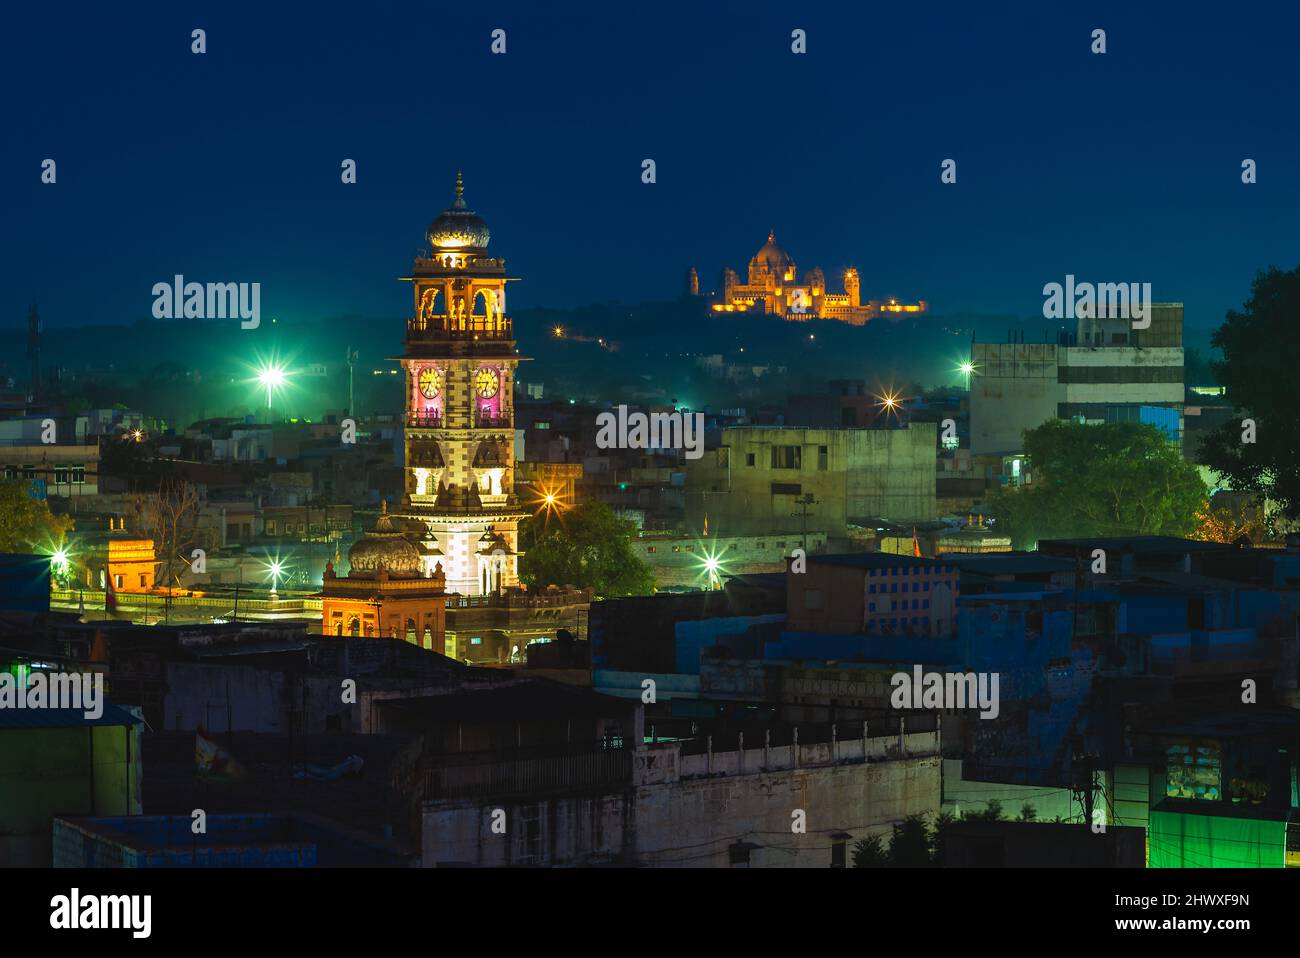 Ghanta ghar Clock tower in jodhpur, rajasthan, india at night Stock Photo